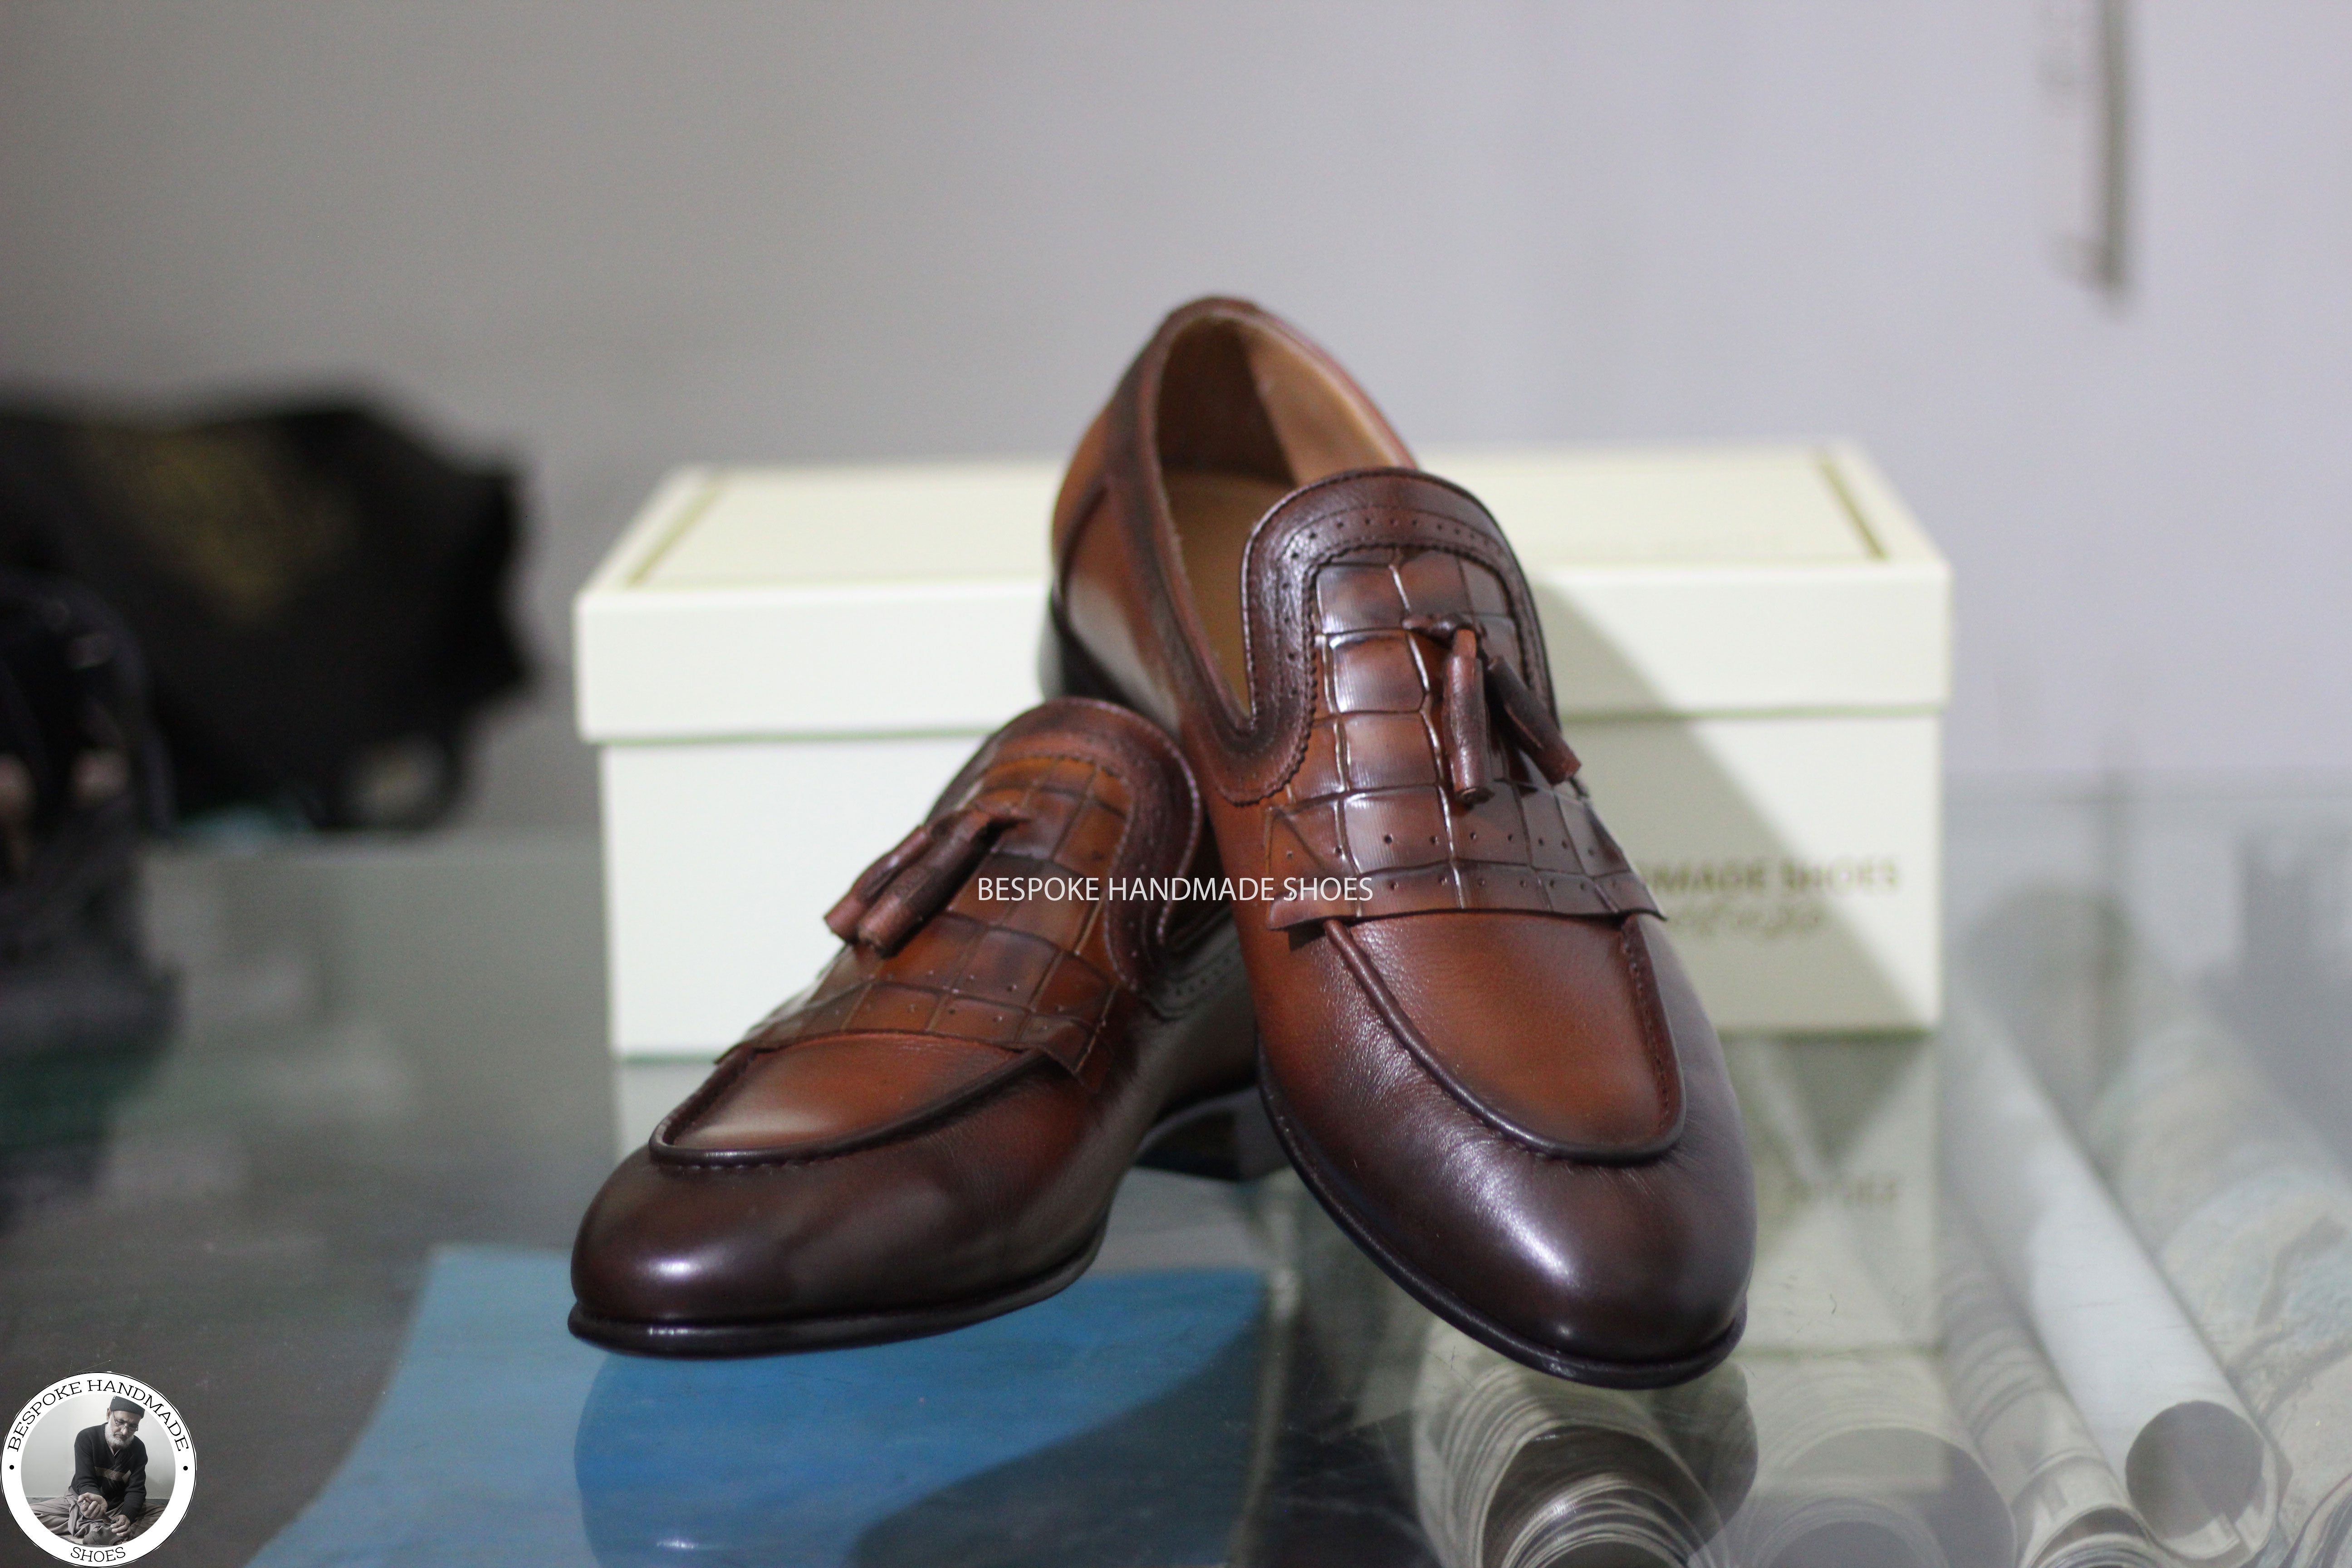 New Handmade Men’s,  Brown Color Leather Tassels Slip on Loafer Fashion Shoes For Men's